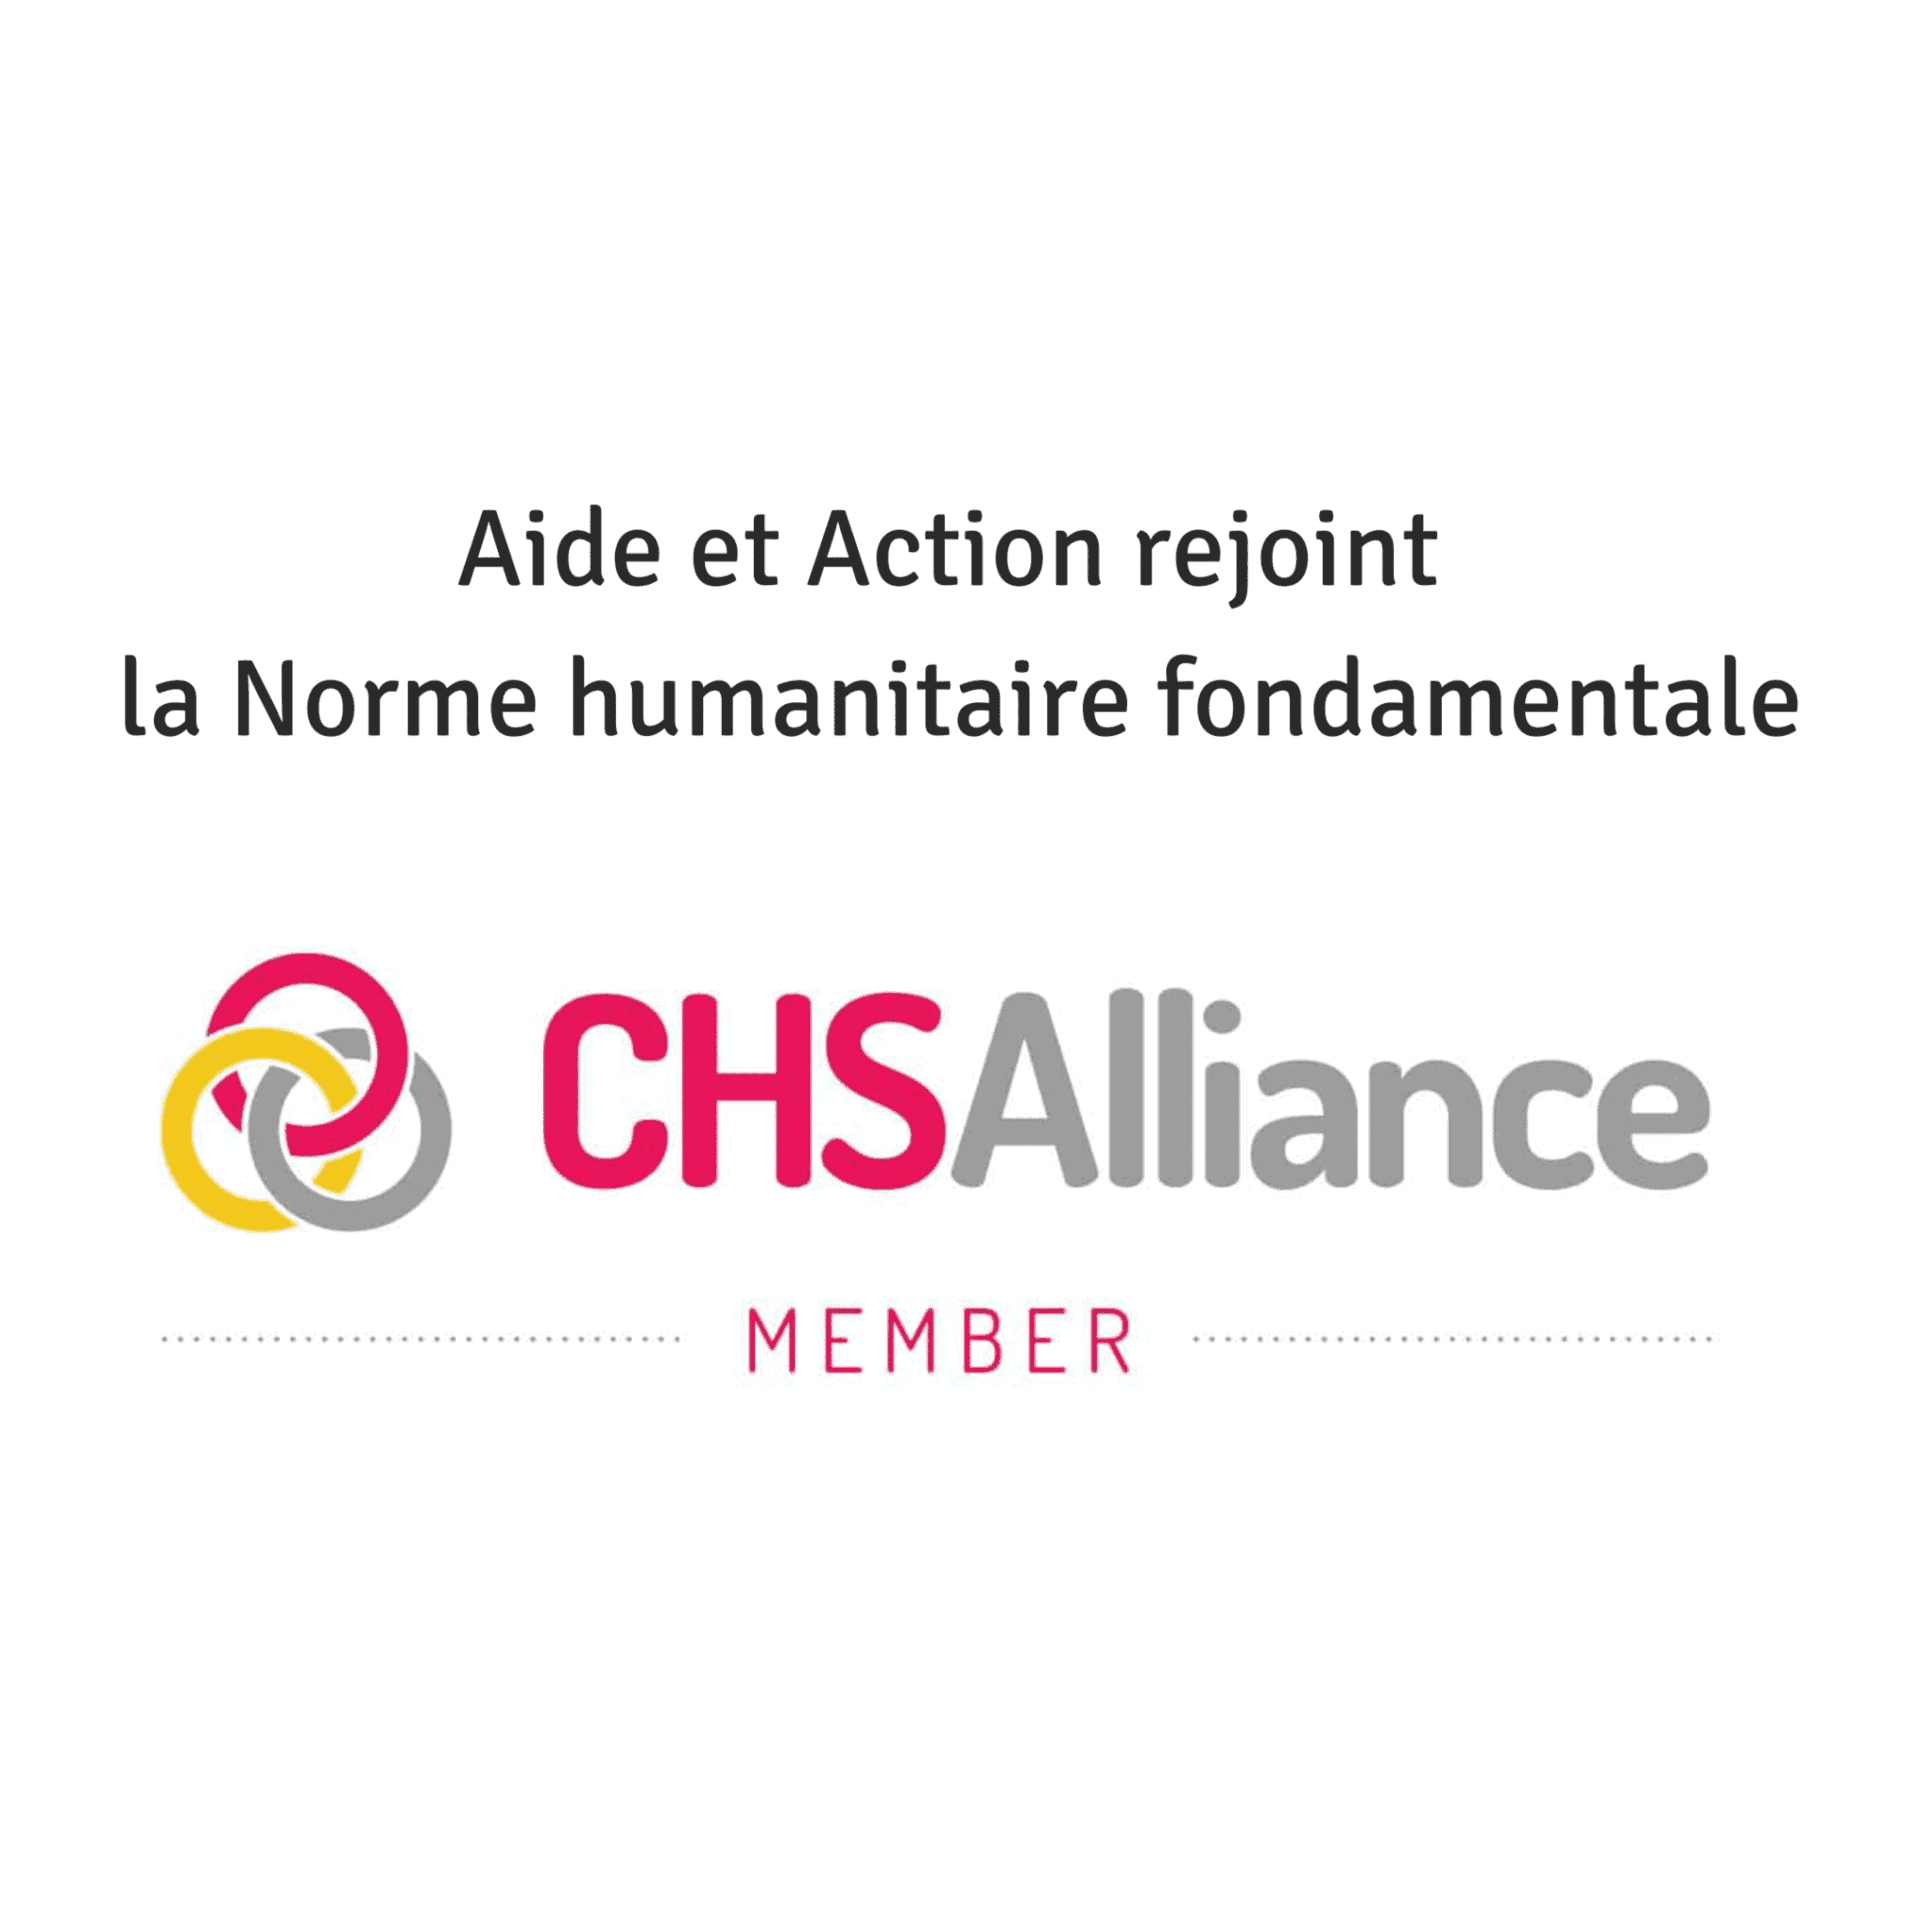 Aide et Action joins the CHS Alliance